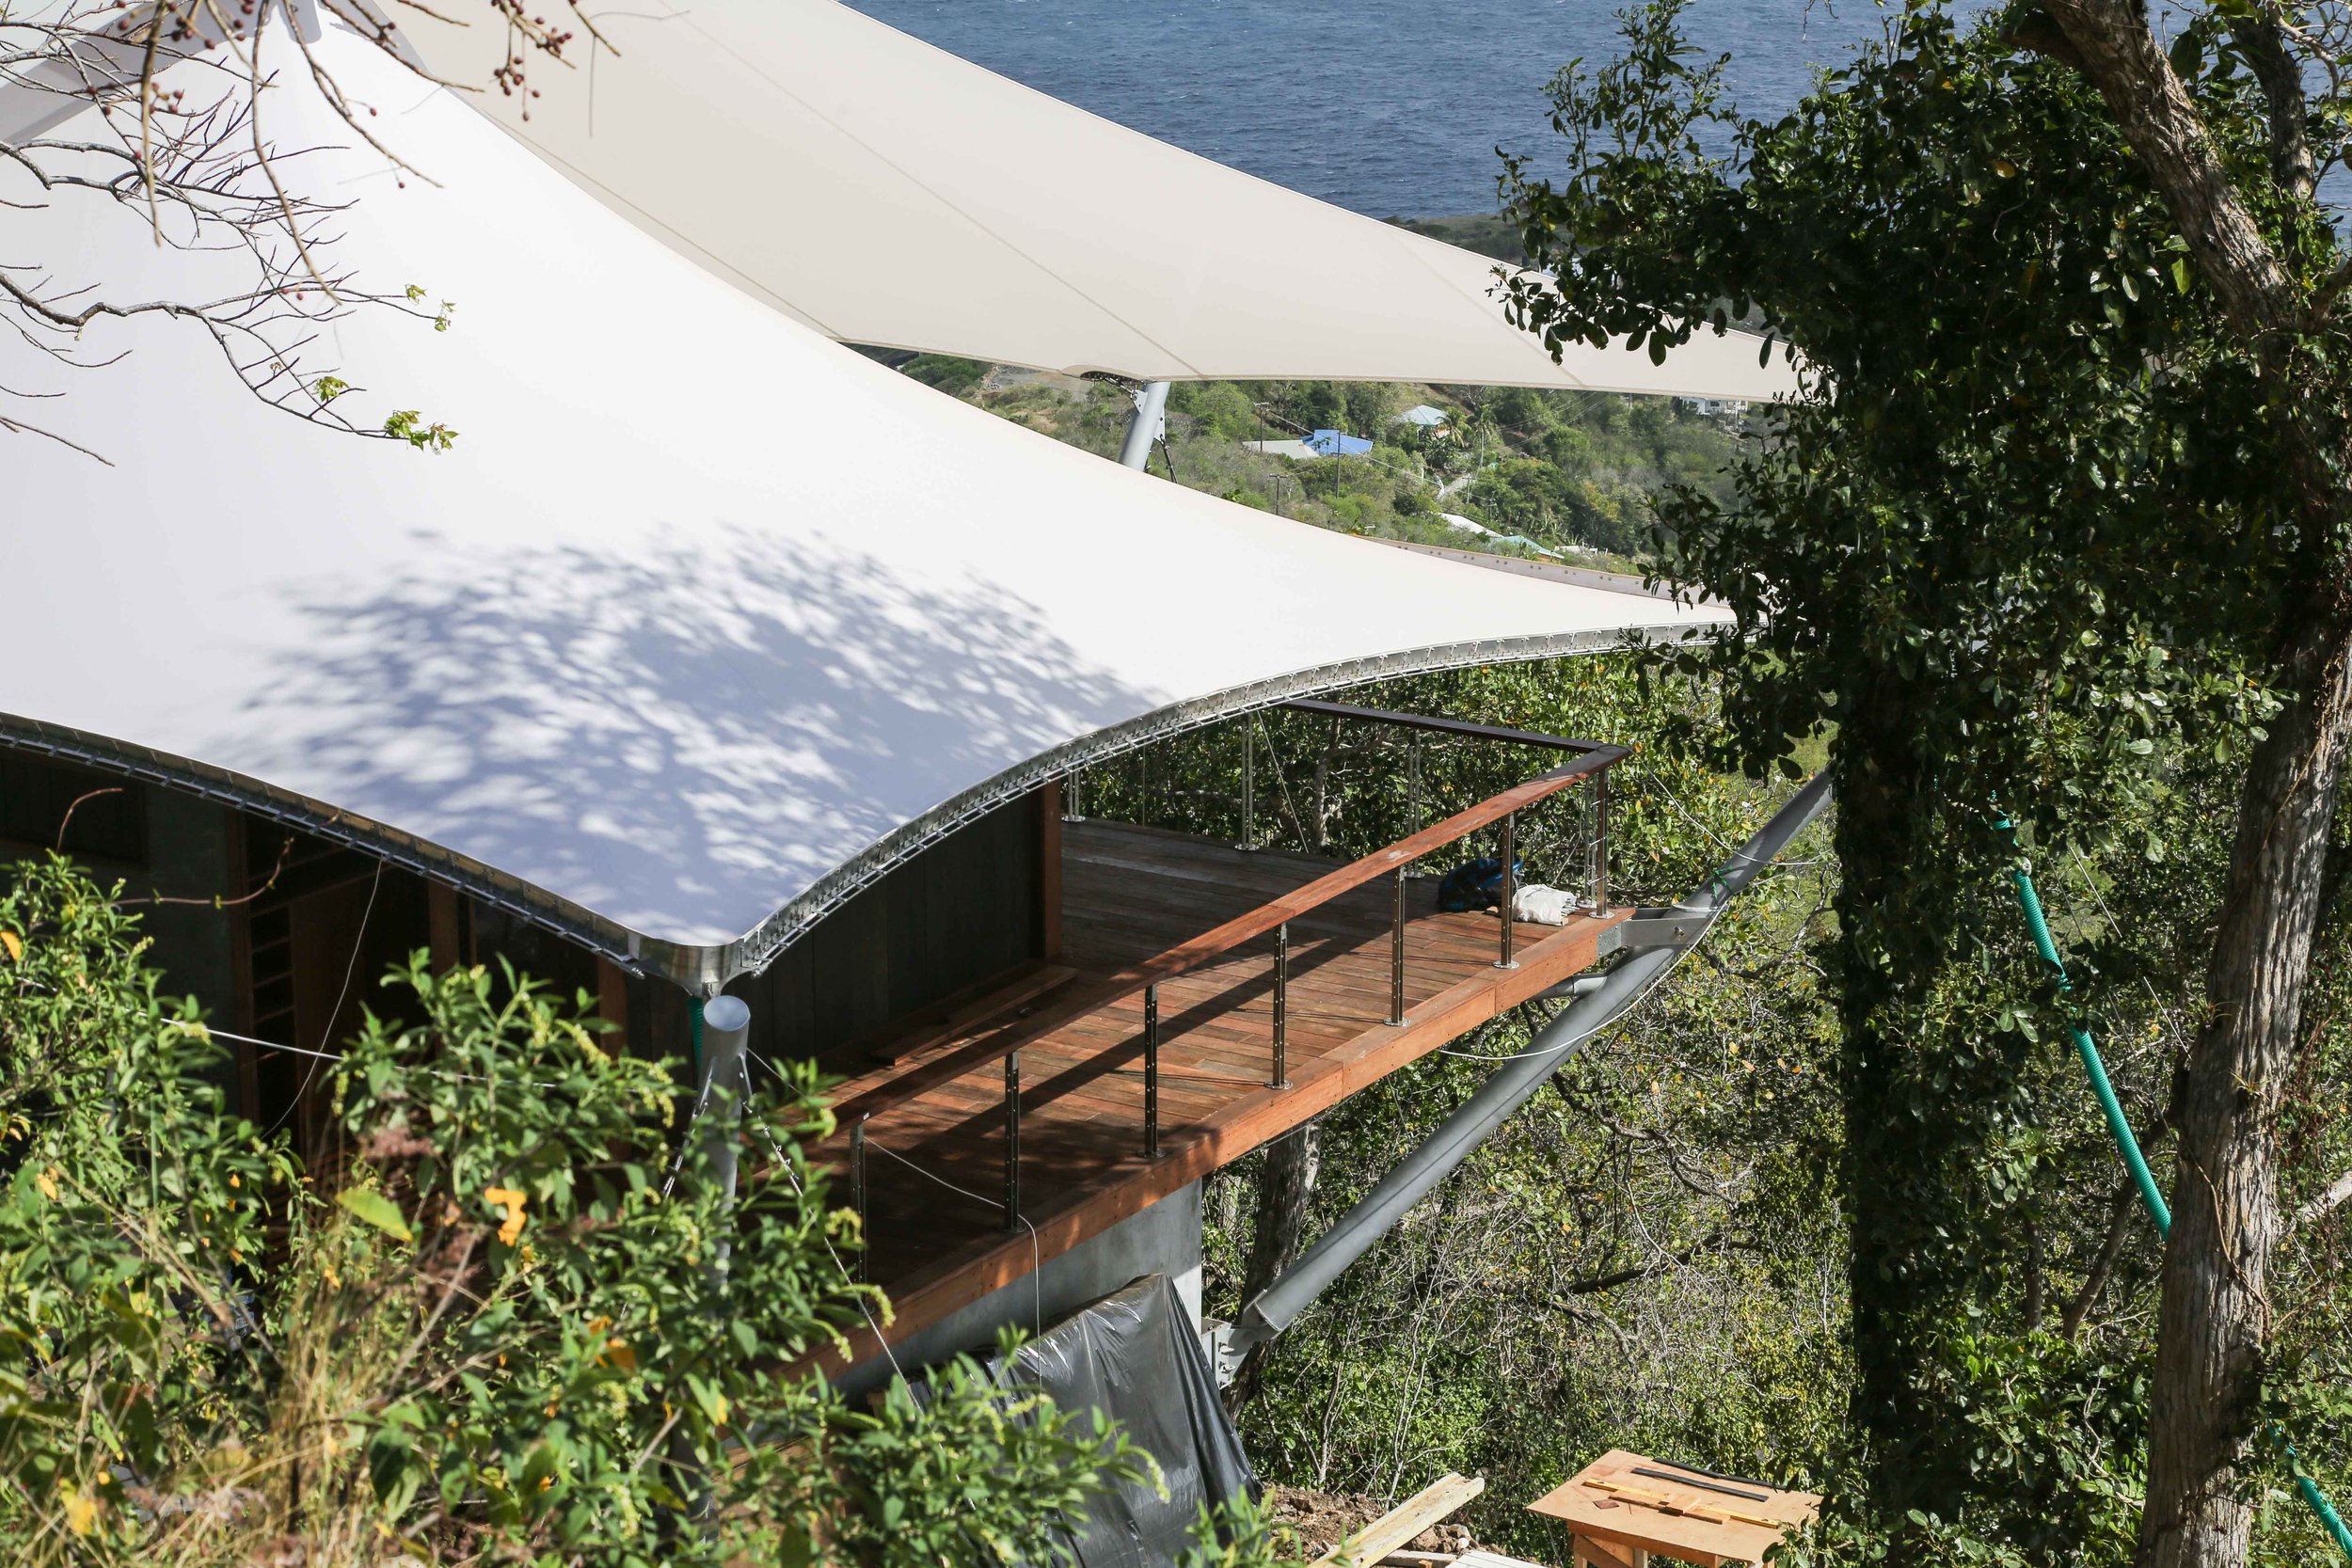 S.E.A.-Studio-Environmental-Architecture-David-Hertz-FAIA-Sail-House-Cloud9-Bequia-Saint-Vincent-Grenadines-Caribbean-Island-sustainable-regenerative-restorative-green-design-hospitality-tropical-resort-hotel-biomimetic-tensile-structure-progress-2.jpg